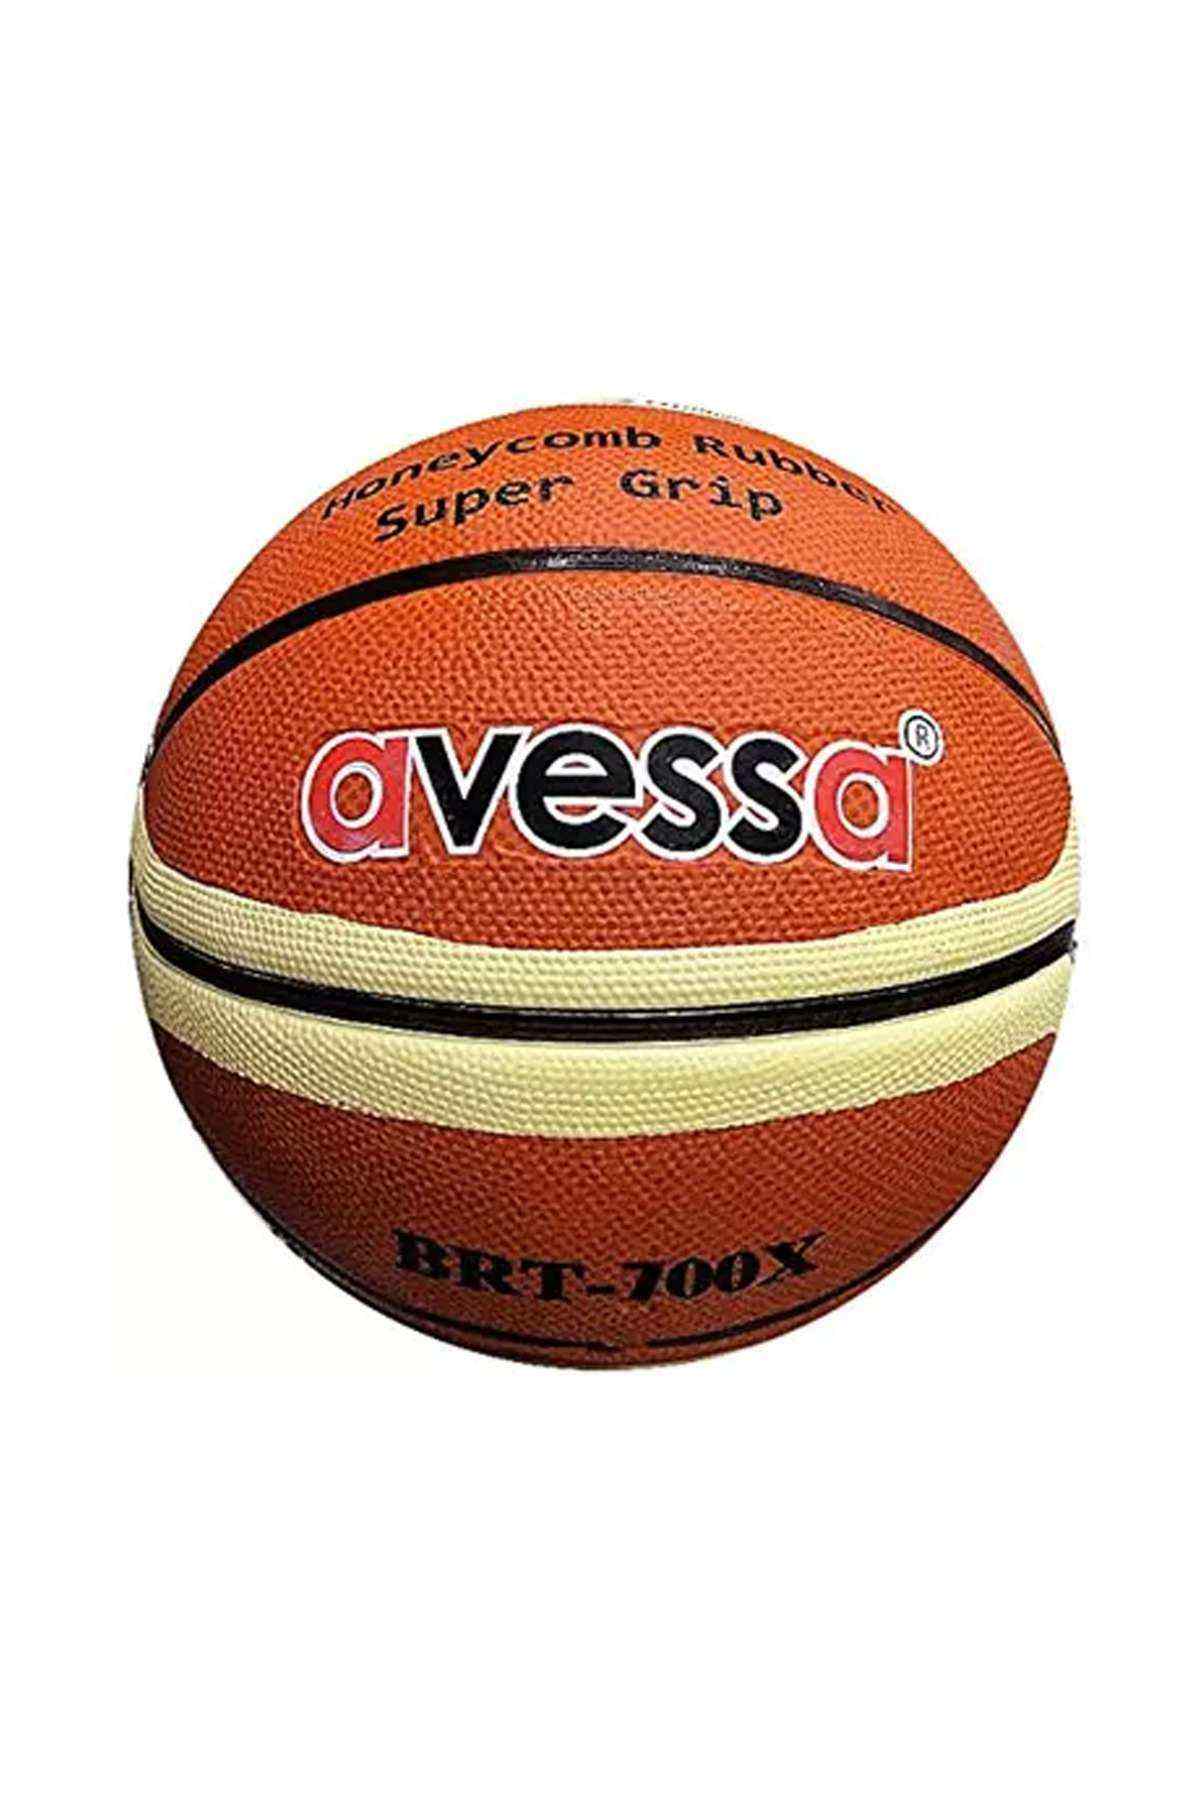 Avessa Brt700X Basketbol Topu No:7 Turuncu